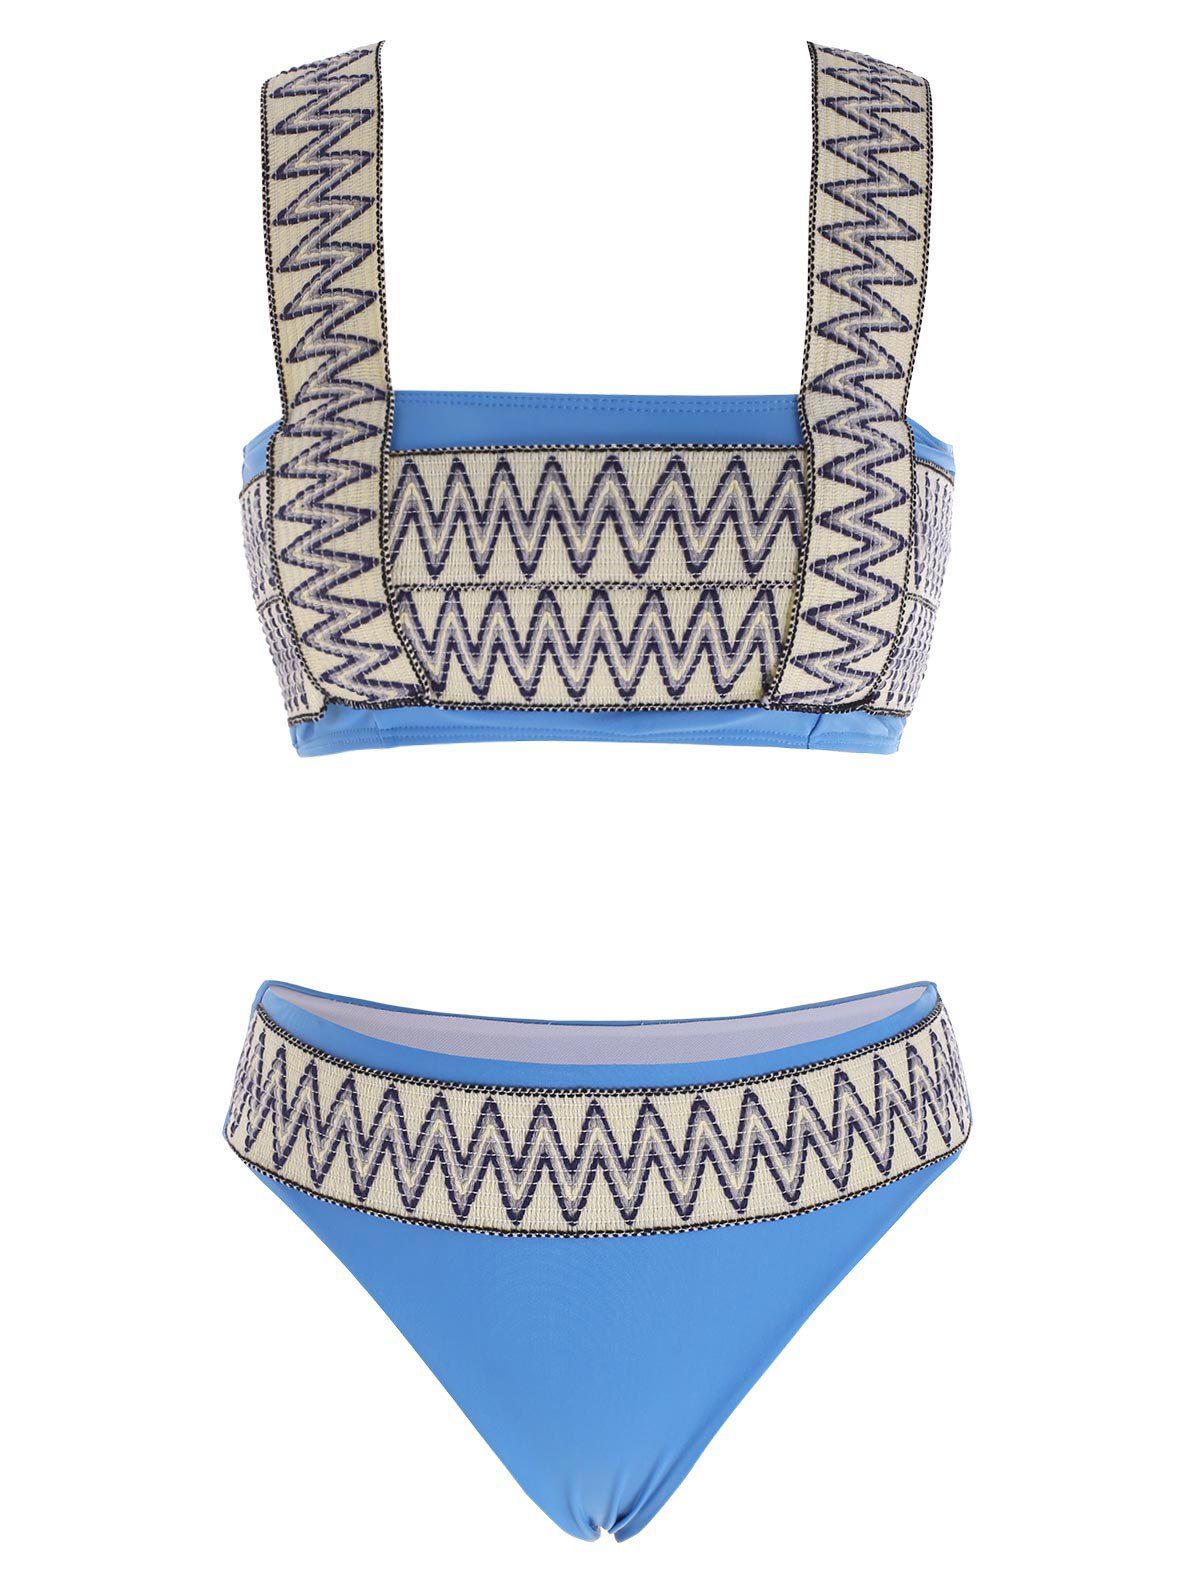 Ethnic Bikini Swimwear Zig Zag Print Embroidered Tape Square Neck Beach Swimsuit - LIGHT BLUE L